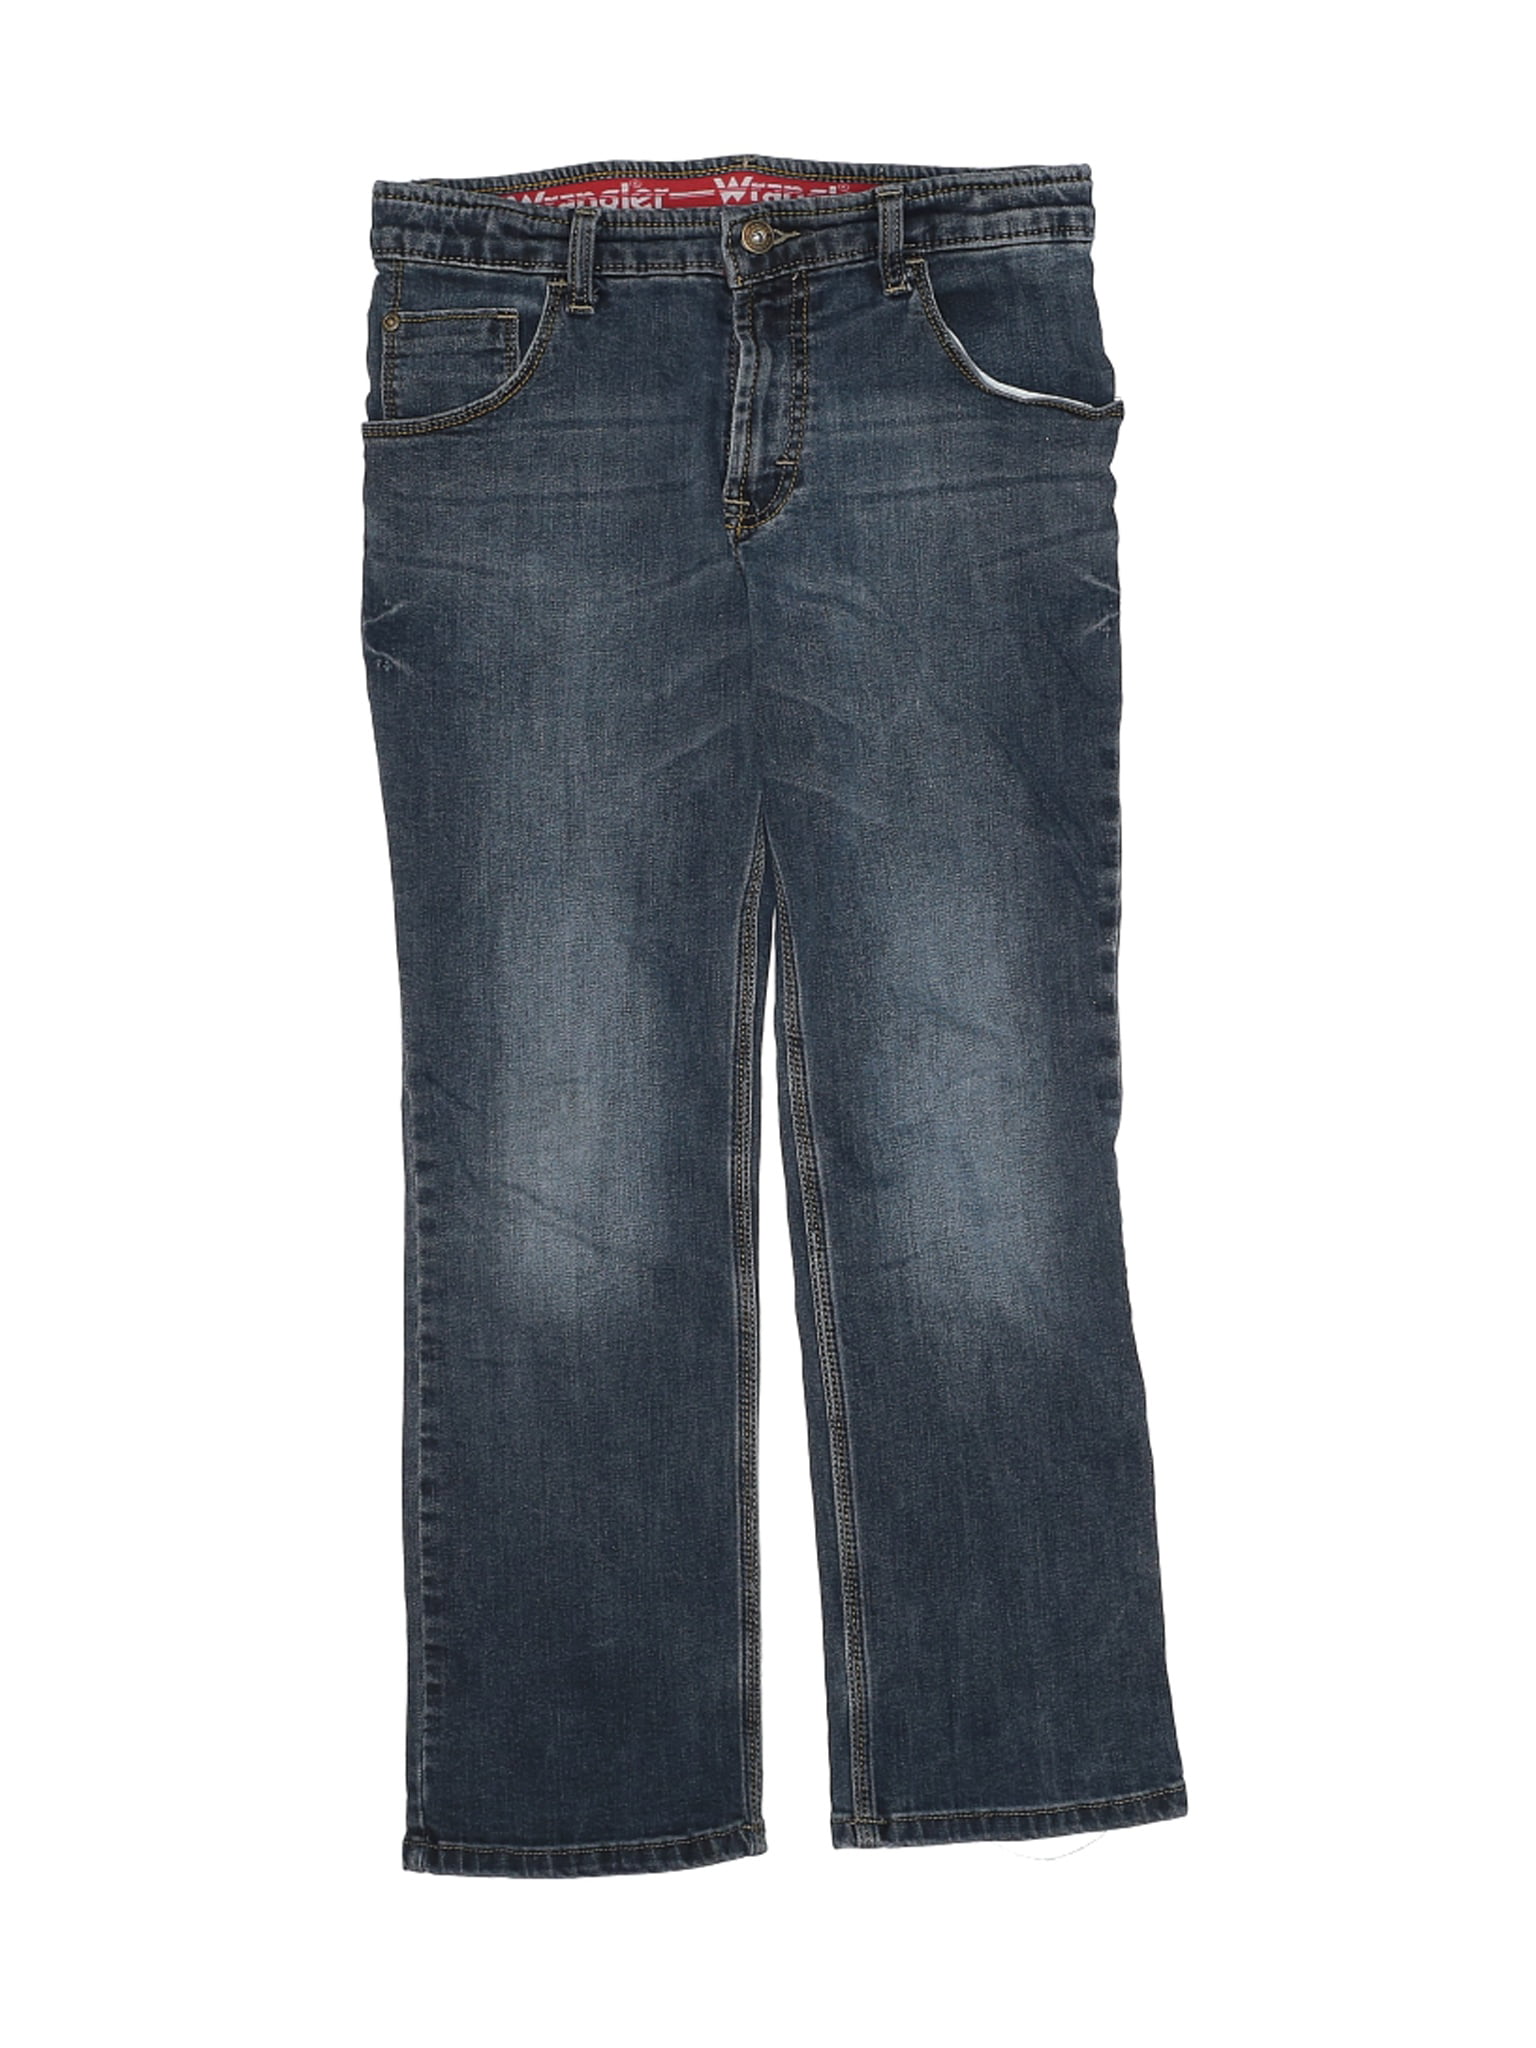 Wrangler - Pre-Owned Wrangler Jeans Co Boy's Size 12 Husky Jeans ...